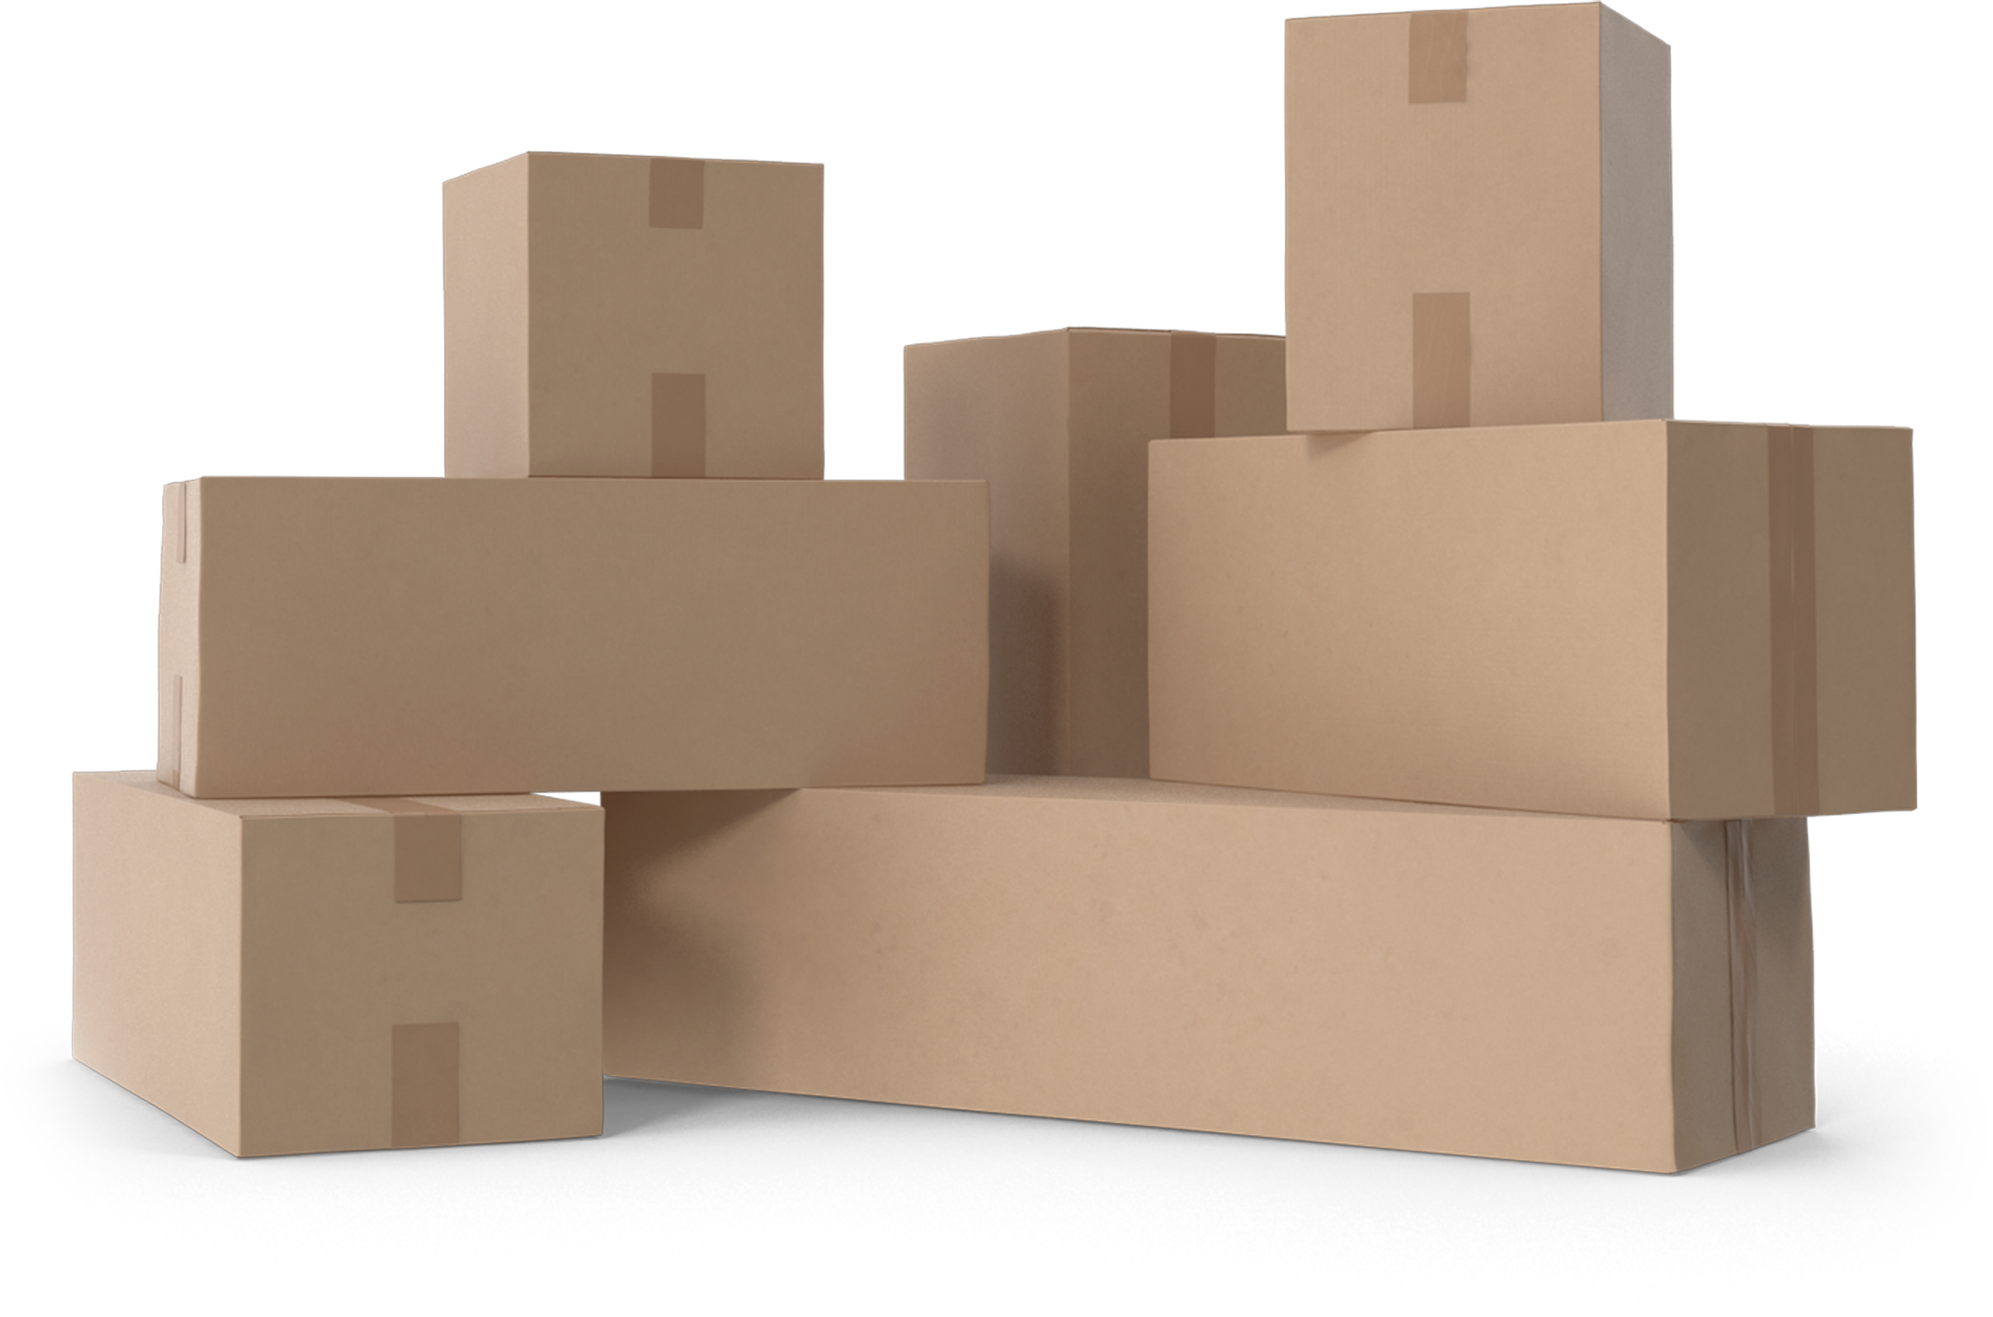 boxes